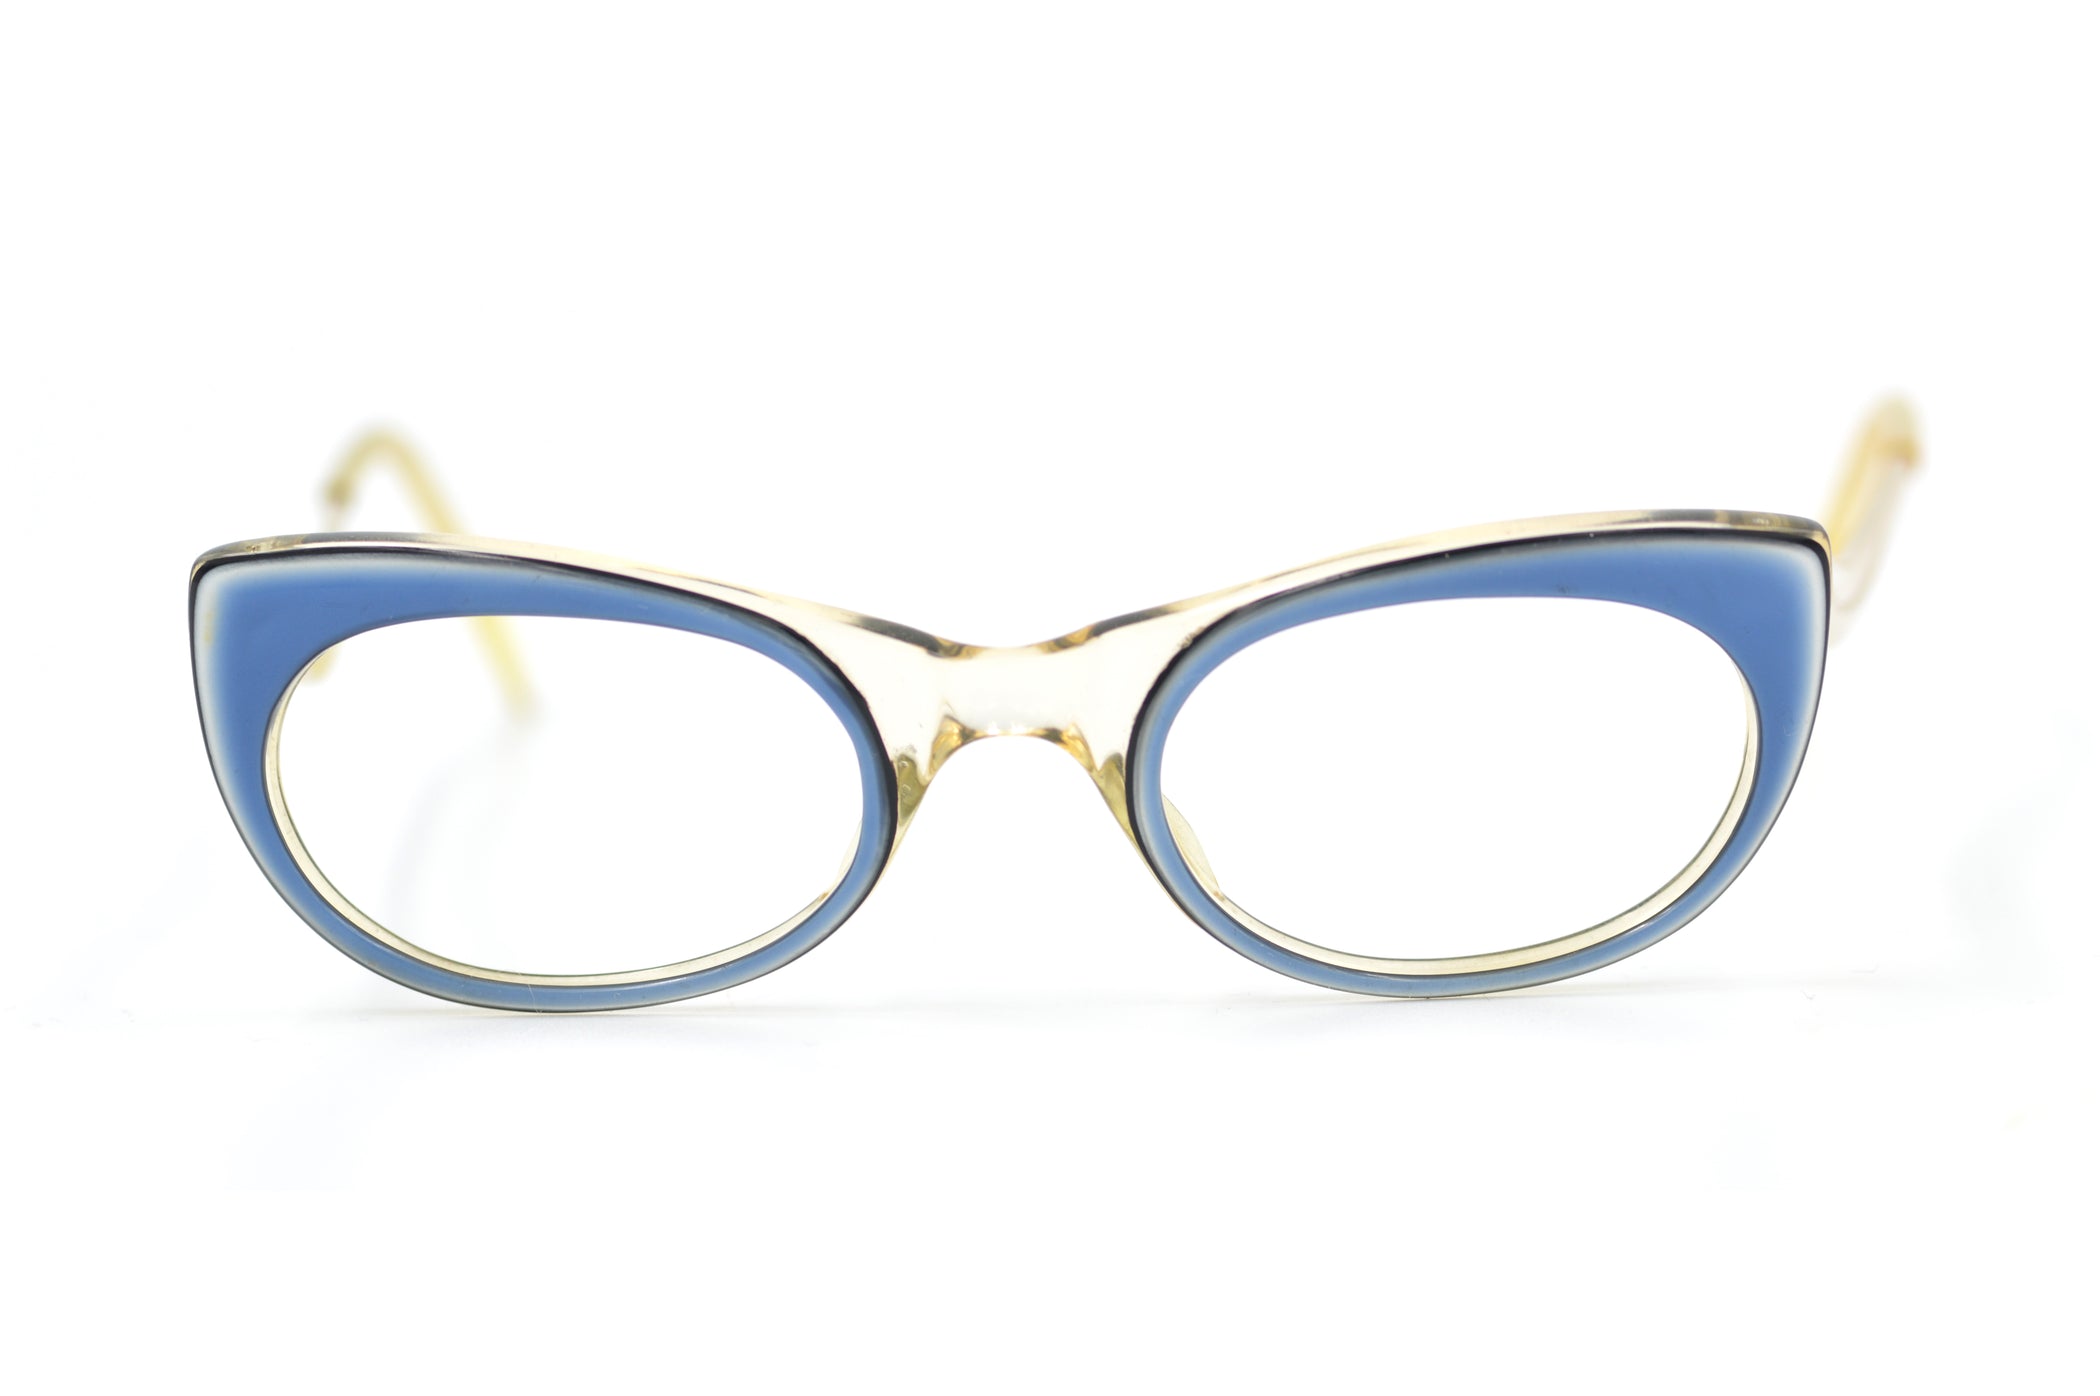 Betty blue 50s vintage glasses. 1950s vintage glasses. Women's 50s glasses. Women's retro glasses. Women's petite vintage glasses. 